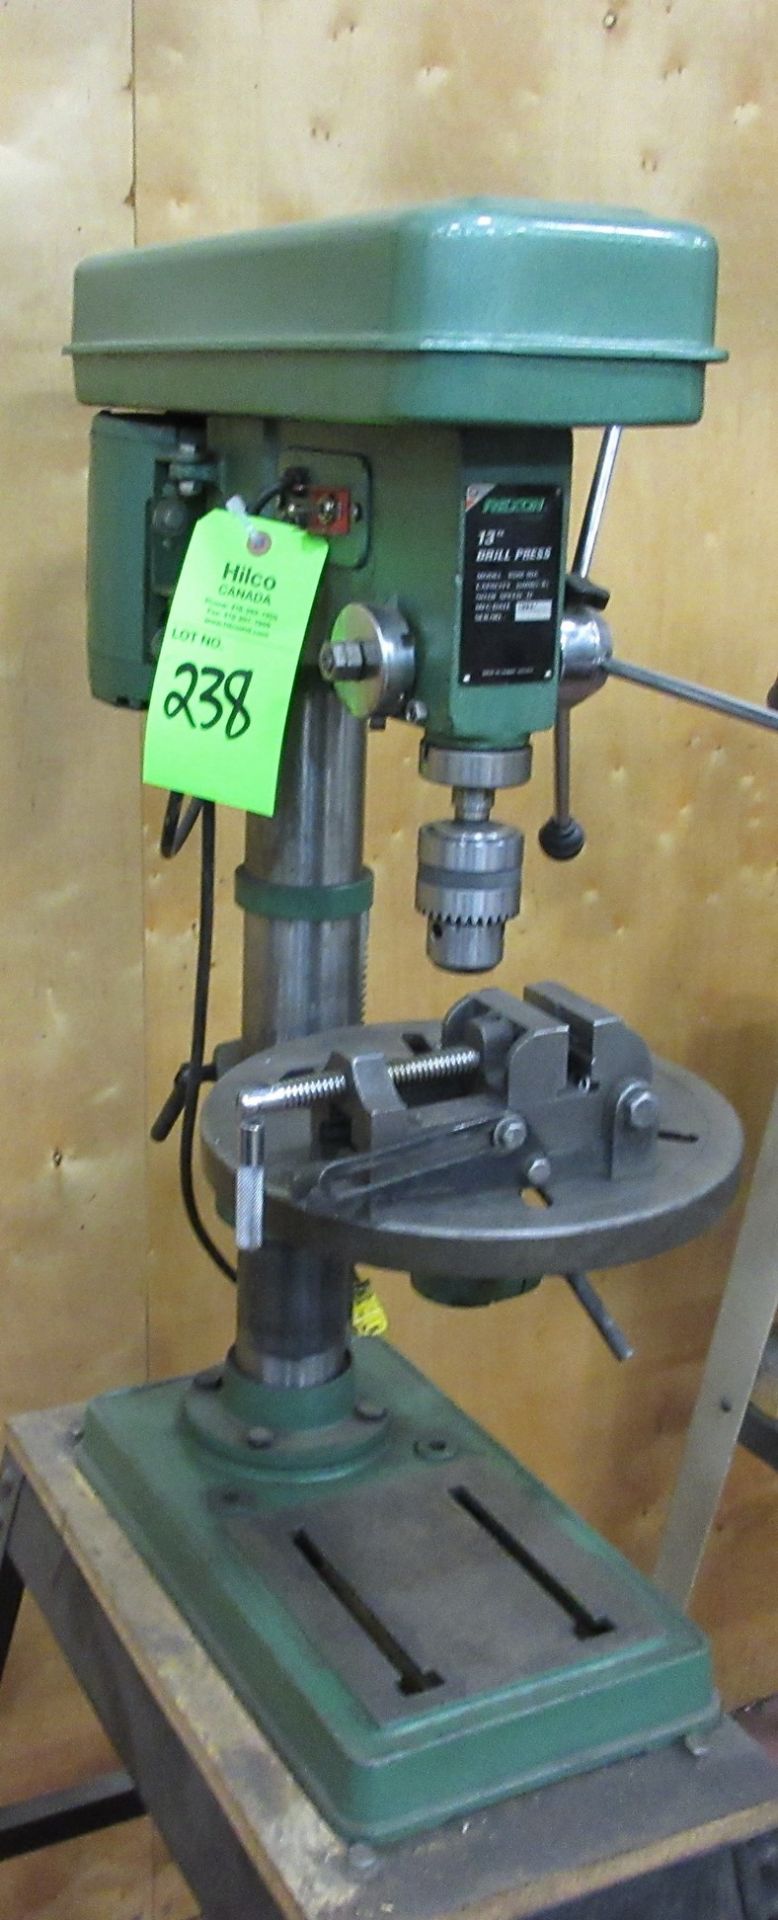 Rexon 13" Drill Press